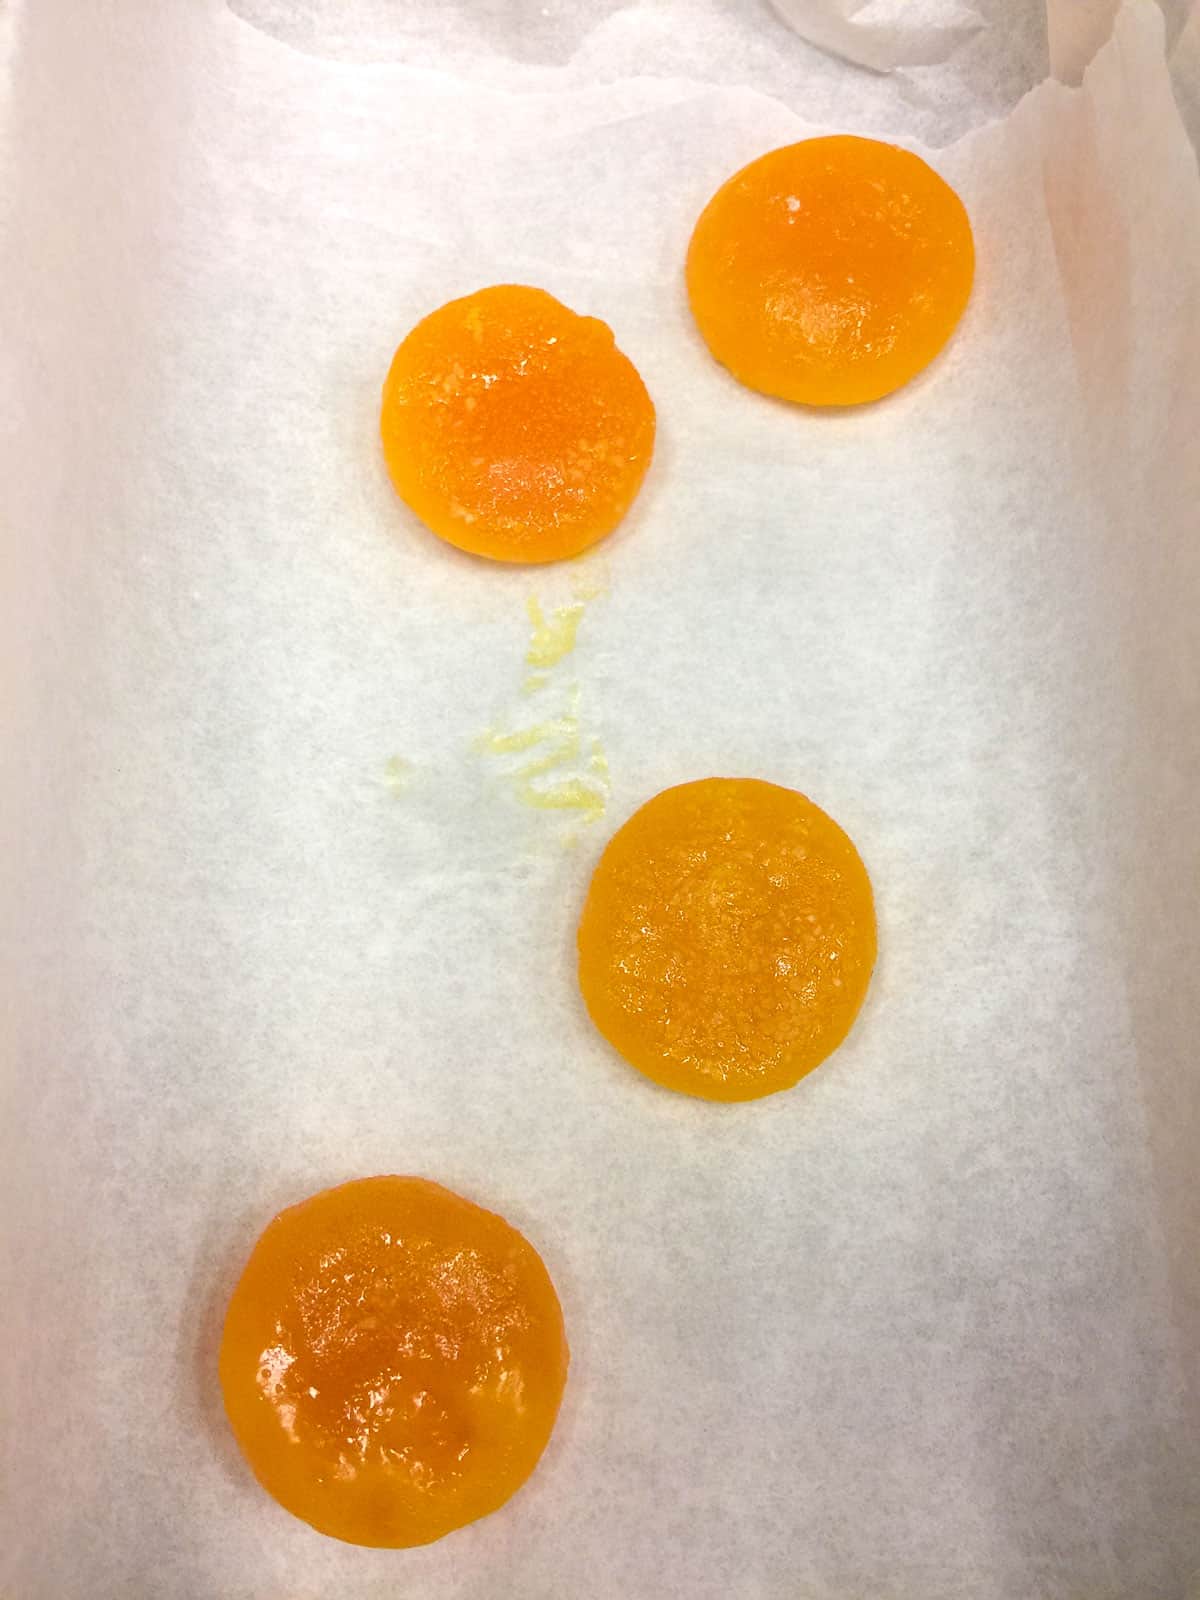 dried cured egg yolks